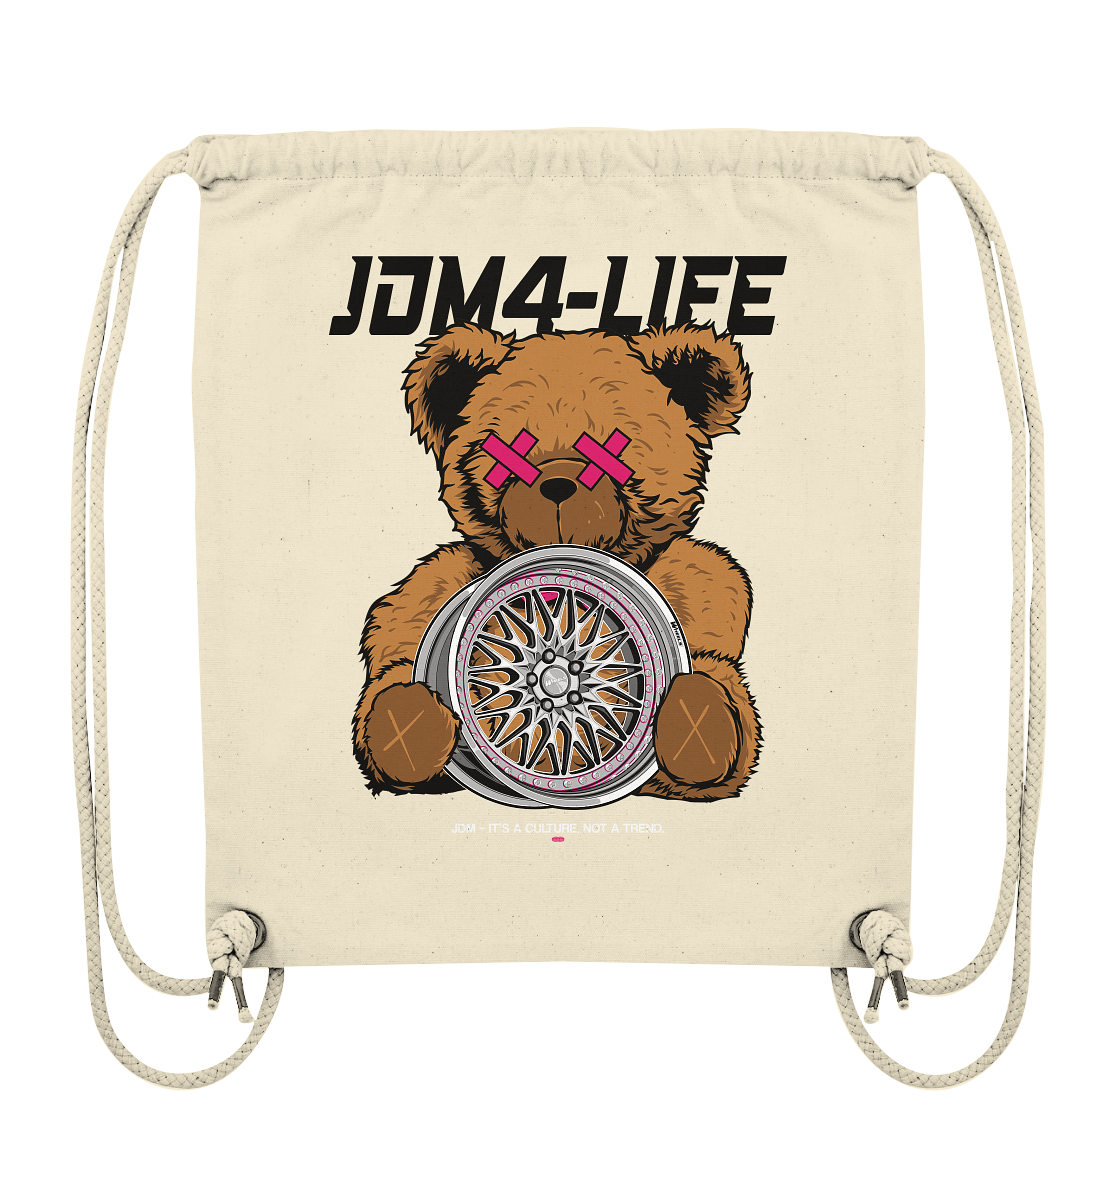 JDM4-Life "Rim" Teddy - Organic Gym-Bag